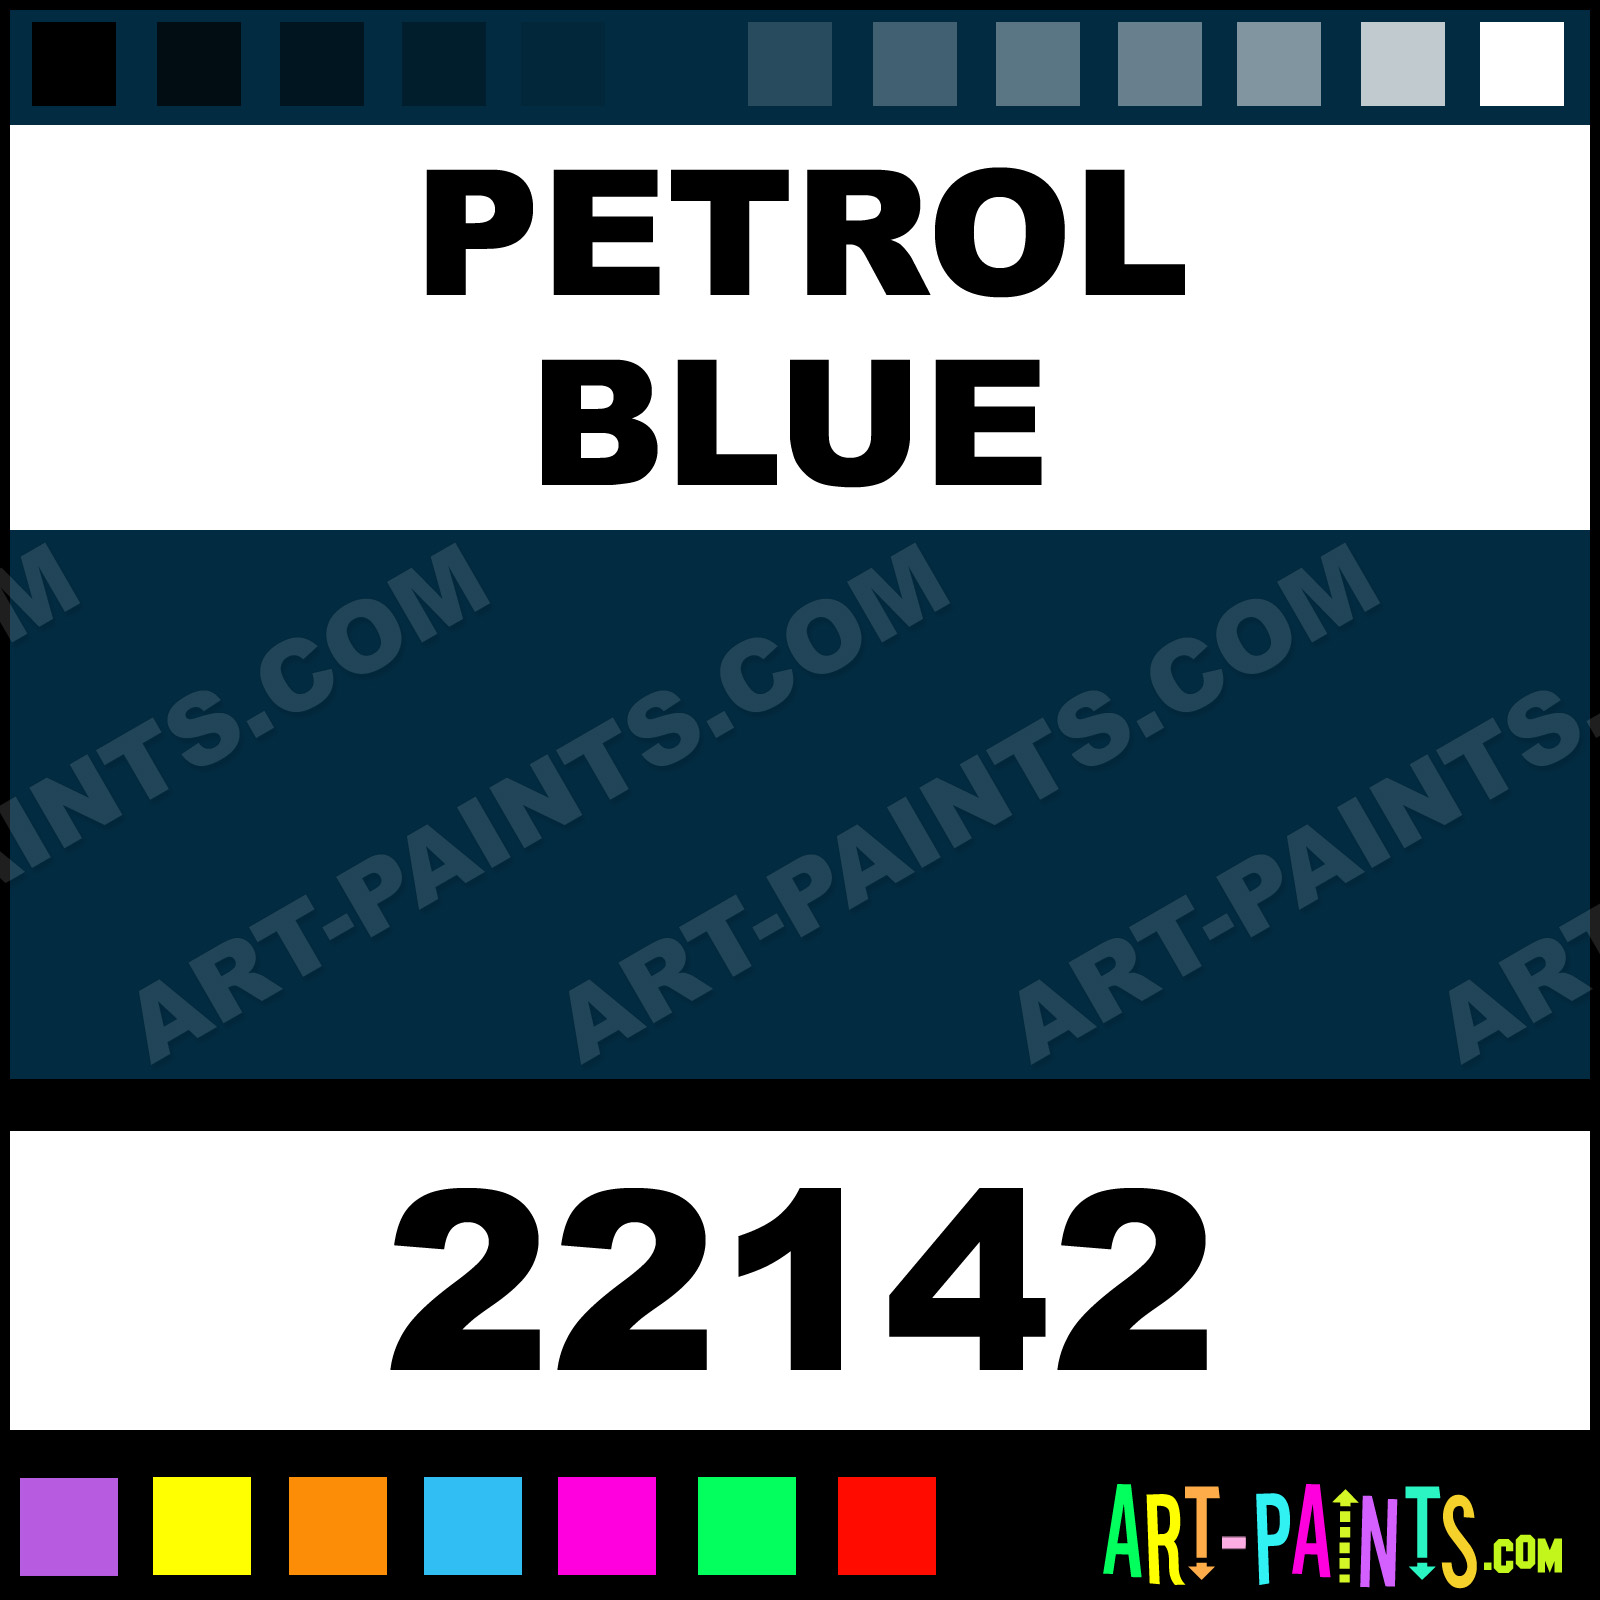 Petrol Blue ProMarker Comic Art 2 Paintmarker Marking Pen Paints 22142 - Petrol Paint, Petrol Blue Color, ProMarker Comic Art 2 Paint, 012A40 - Art-Paints.com